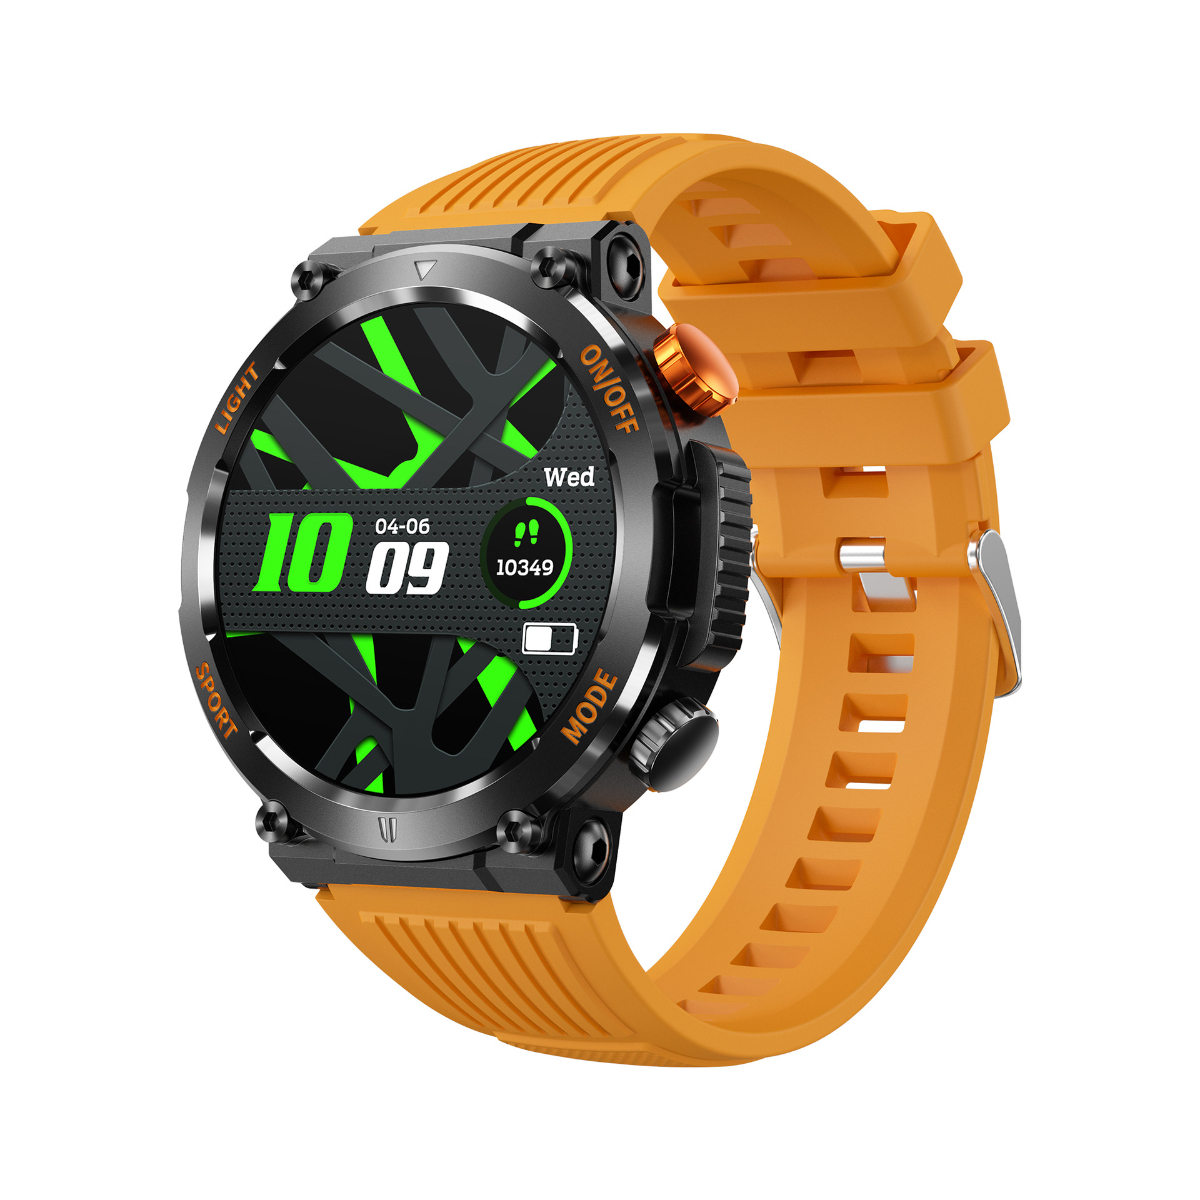 beleuchtet Silikon, Blutdruckmessgerät Herzfrequenz Silikon Kompass Smart Bluetooth Silikon Orange sprechende Smartwatch Uhr ENBAOXIN LED Watch